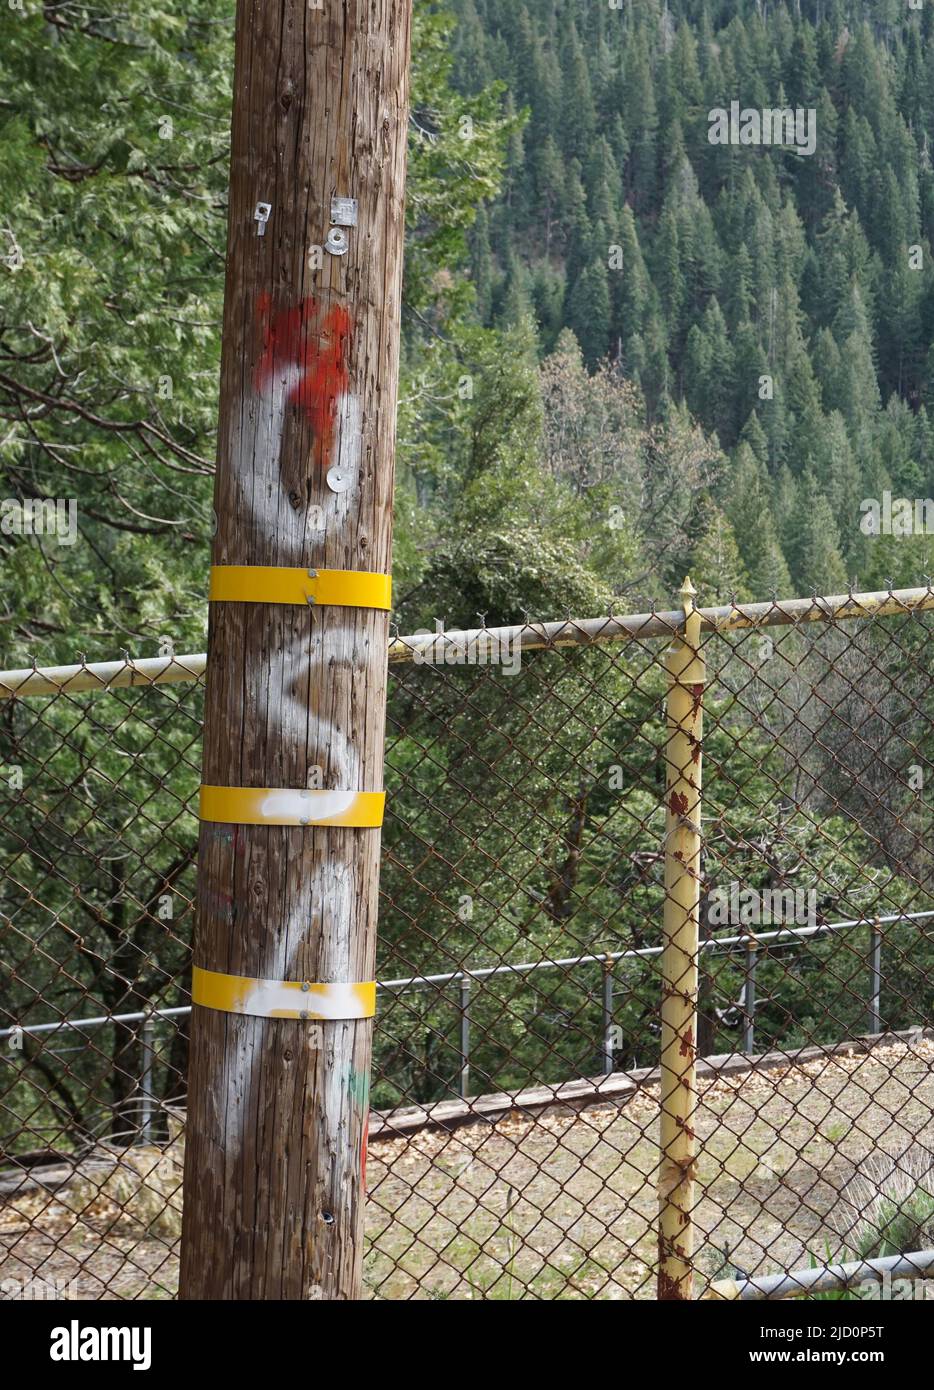 USA spray painted onto an electric pole, California Stock Photo